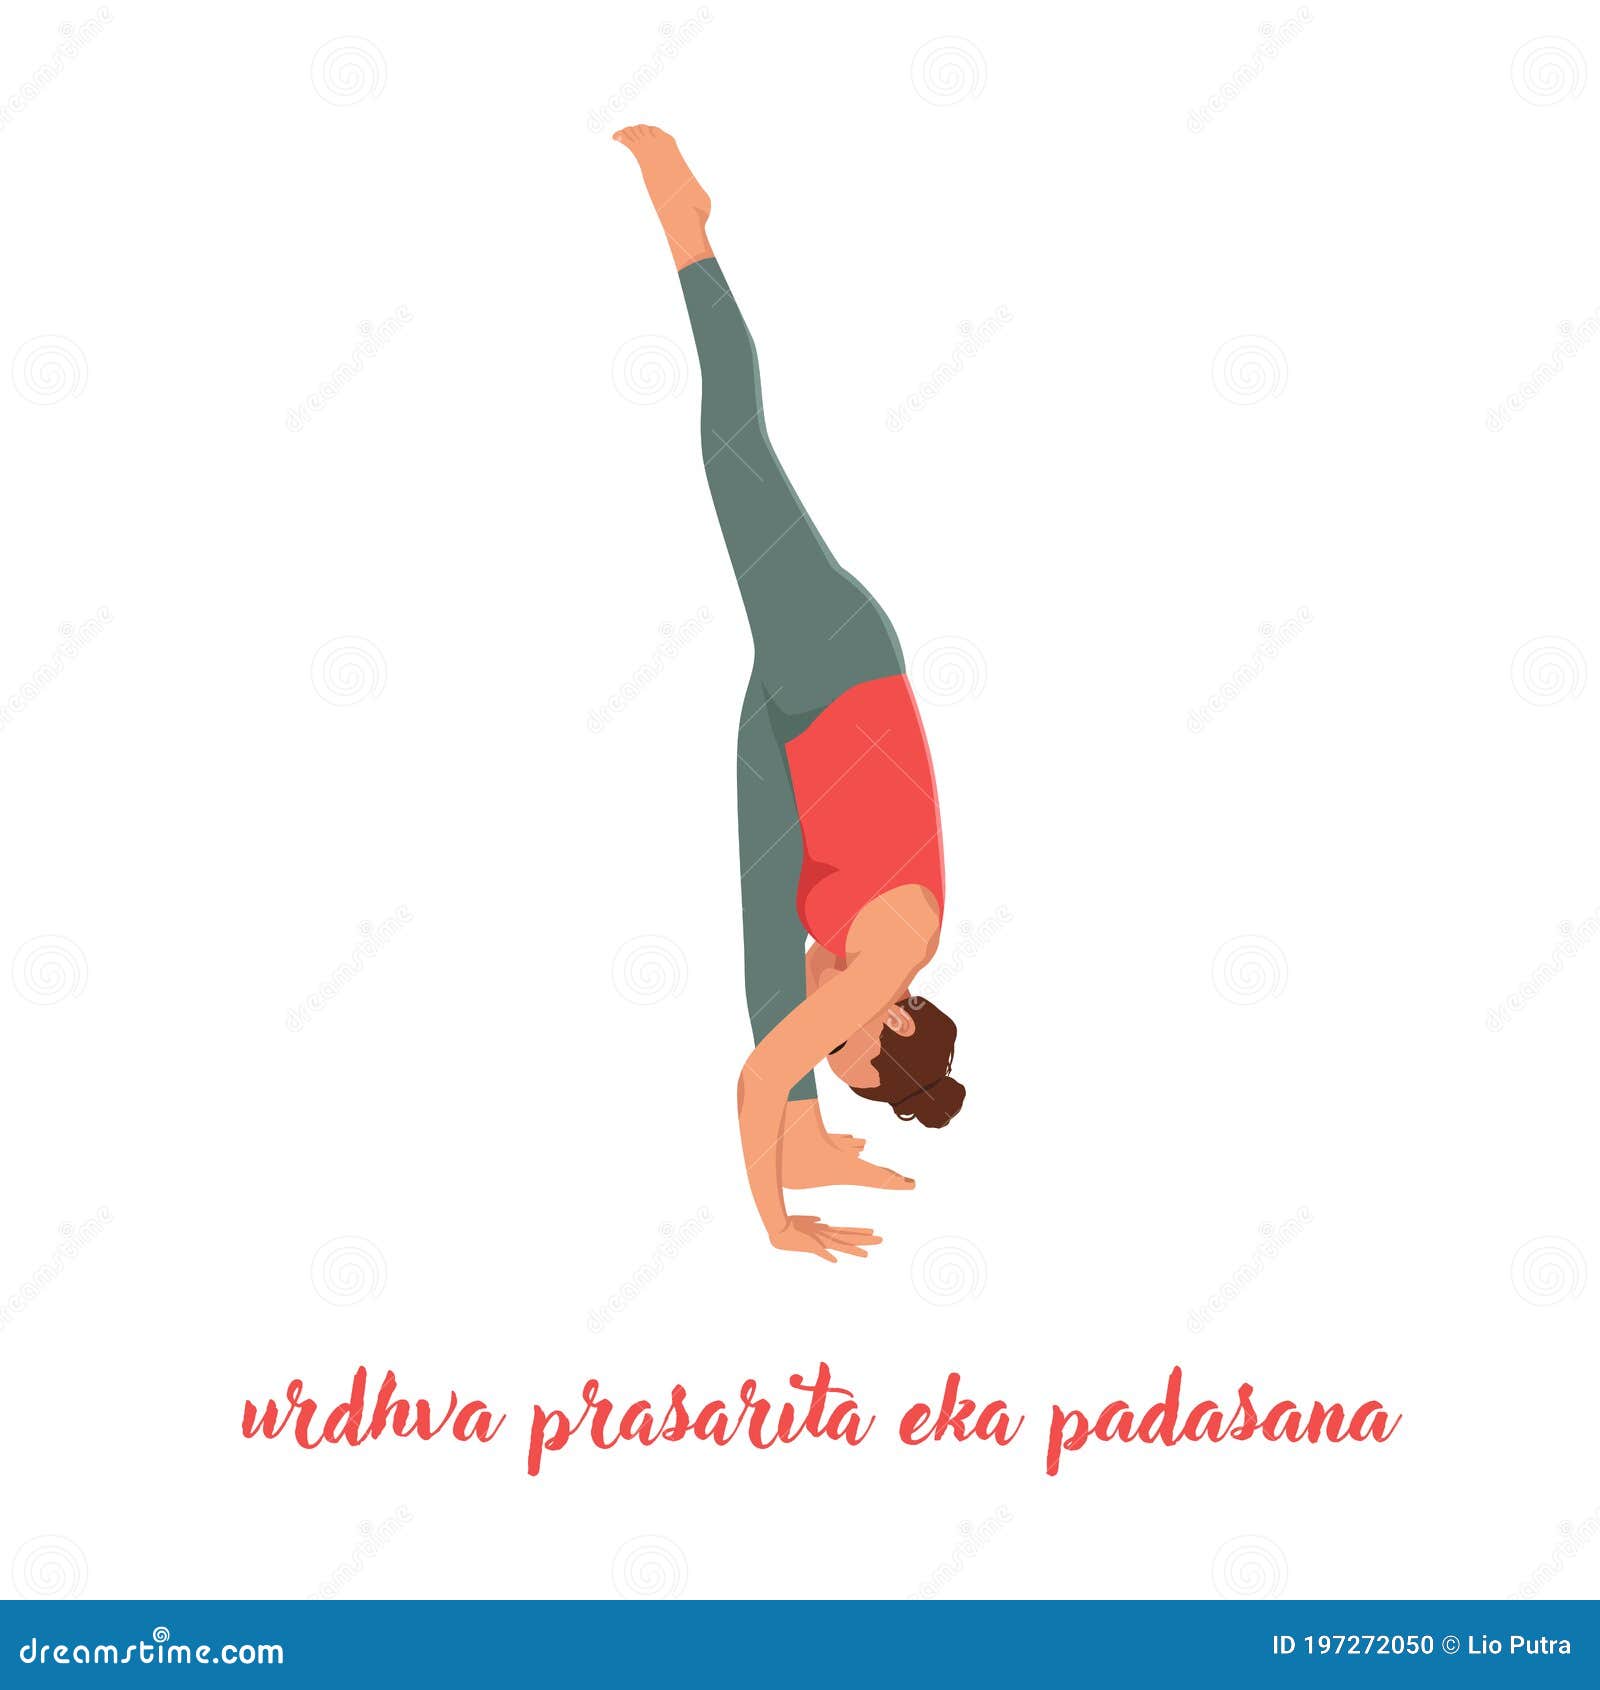 Safe Yoga after Hysterectomy or Pelvic Prolapse Surgery - Pelvic Exercises